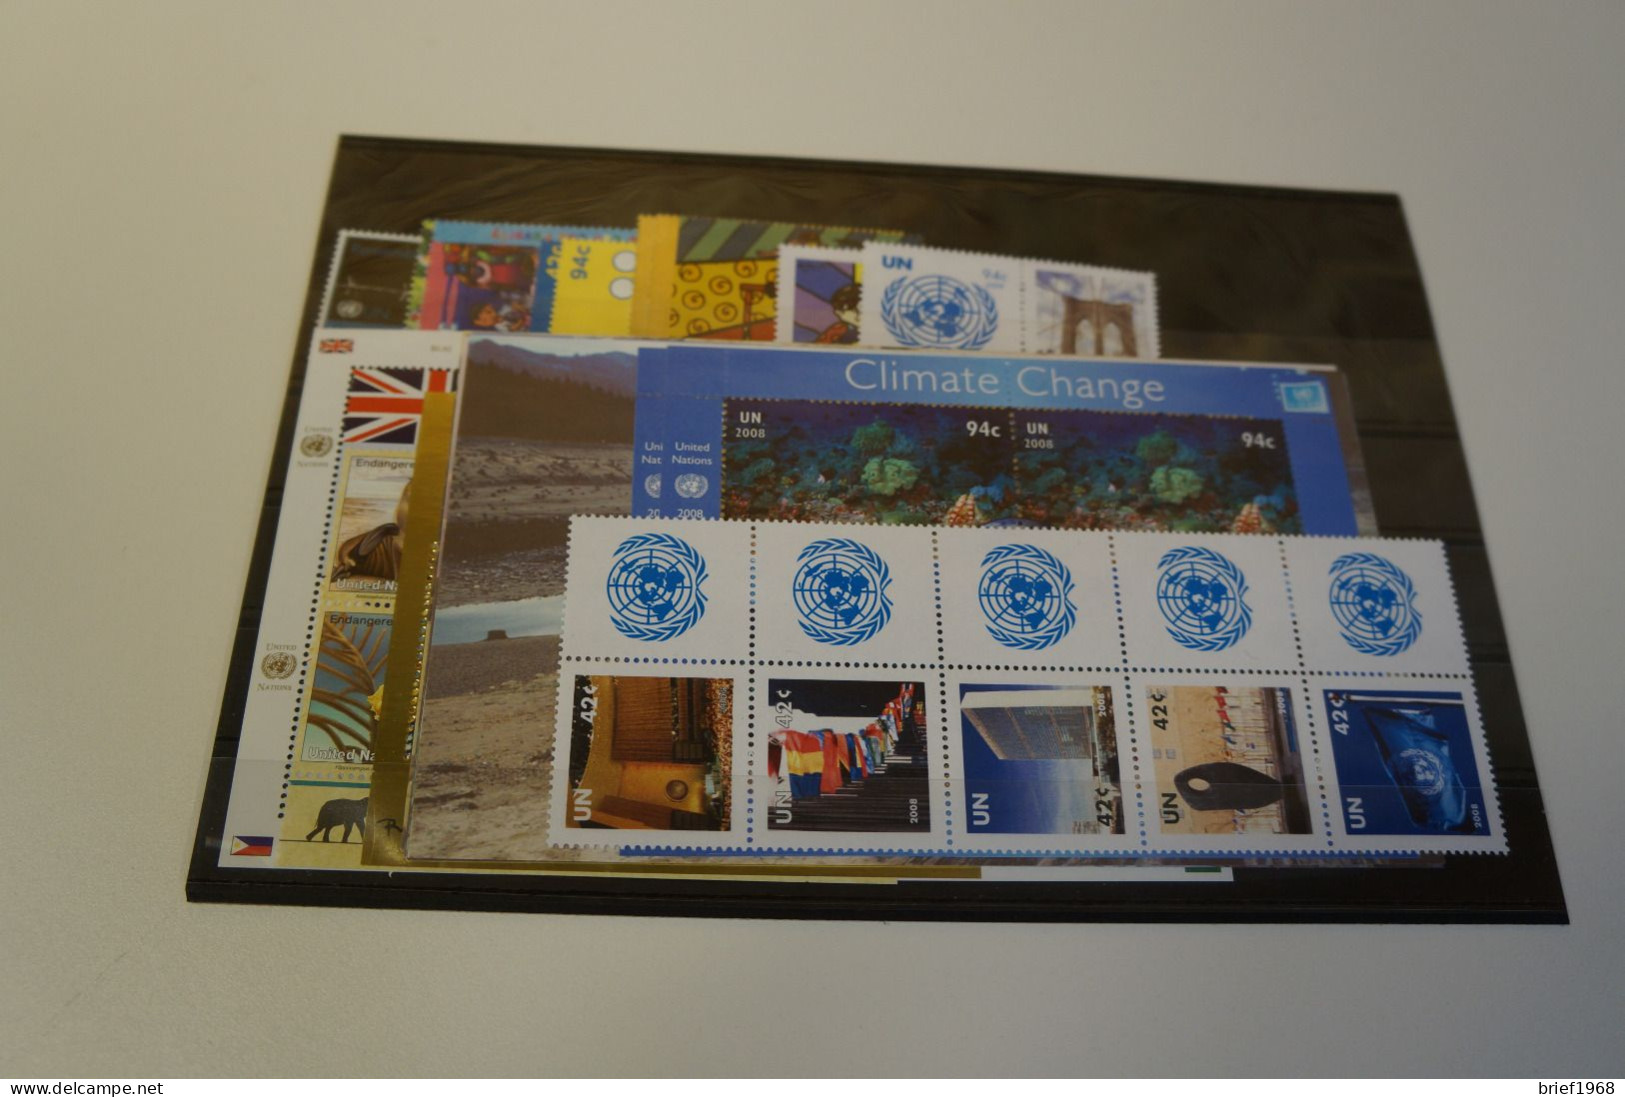 UNO New York Jahrgang 2008 Postfrisch Komplett (27442) - Used Stamps